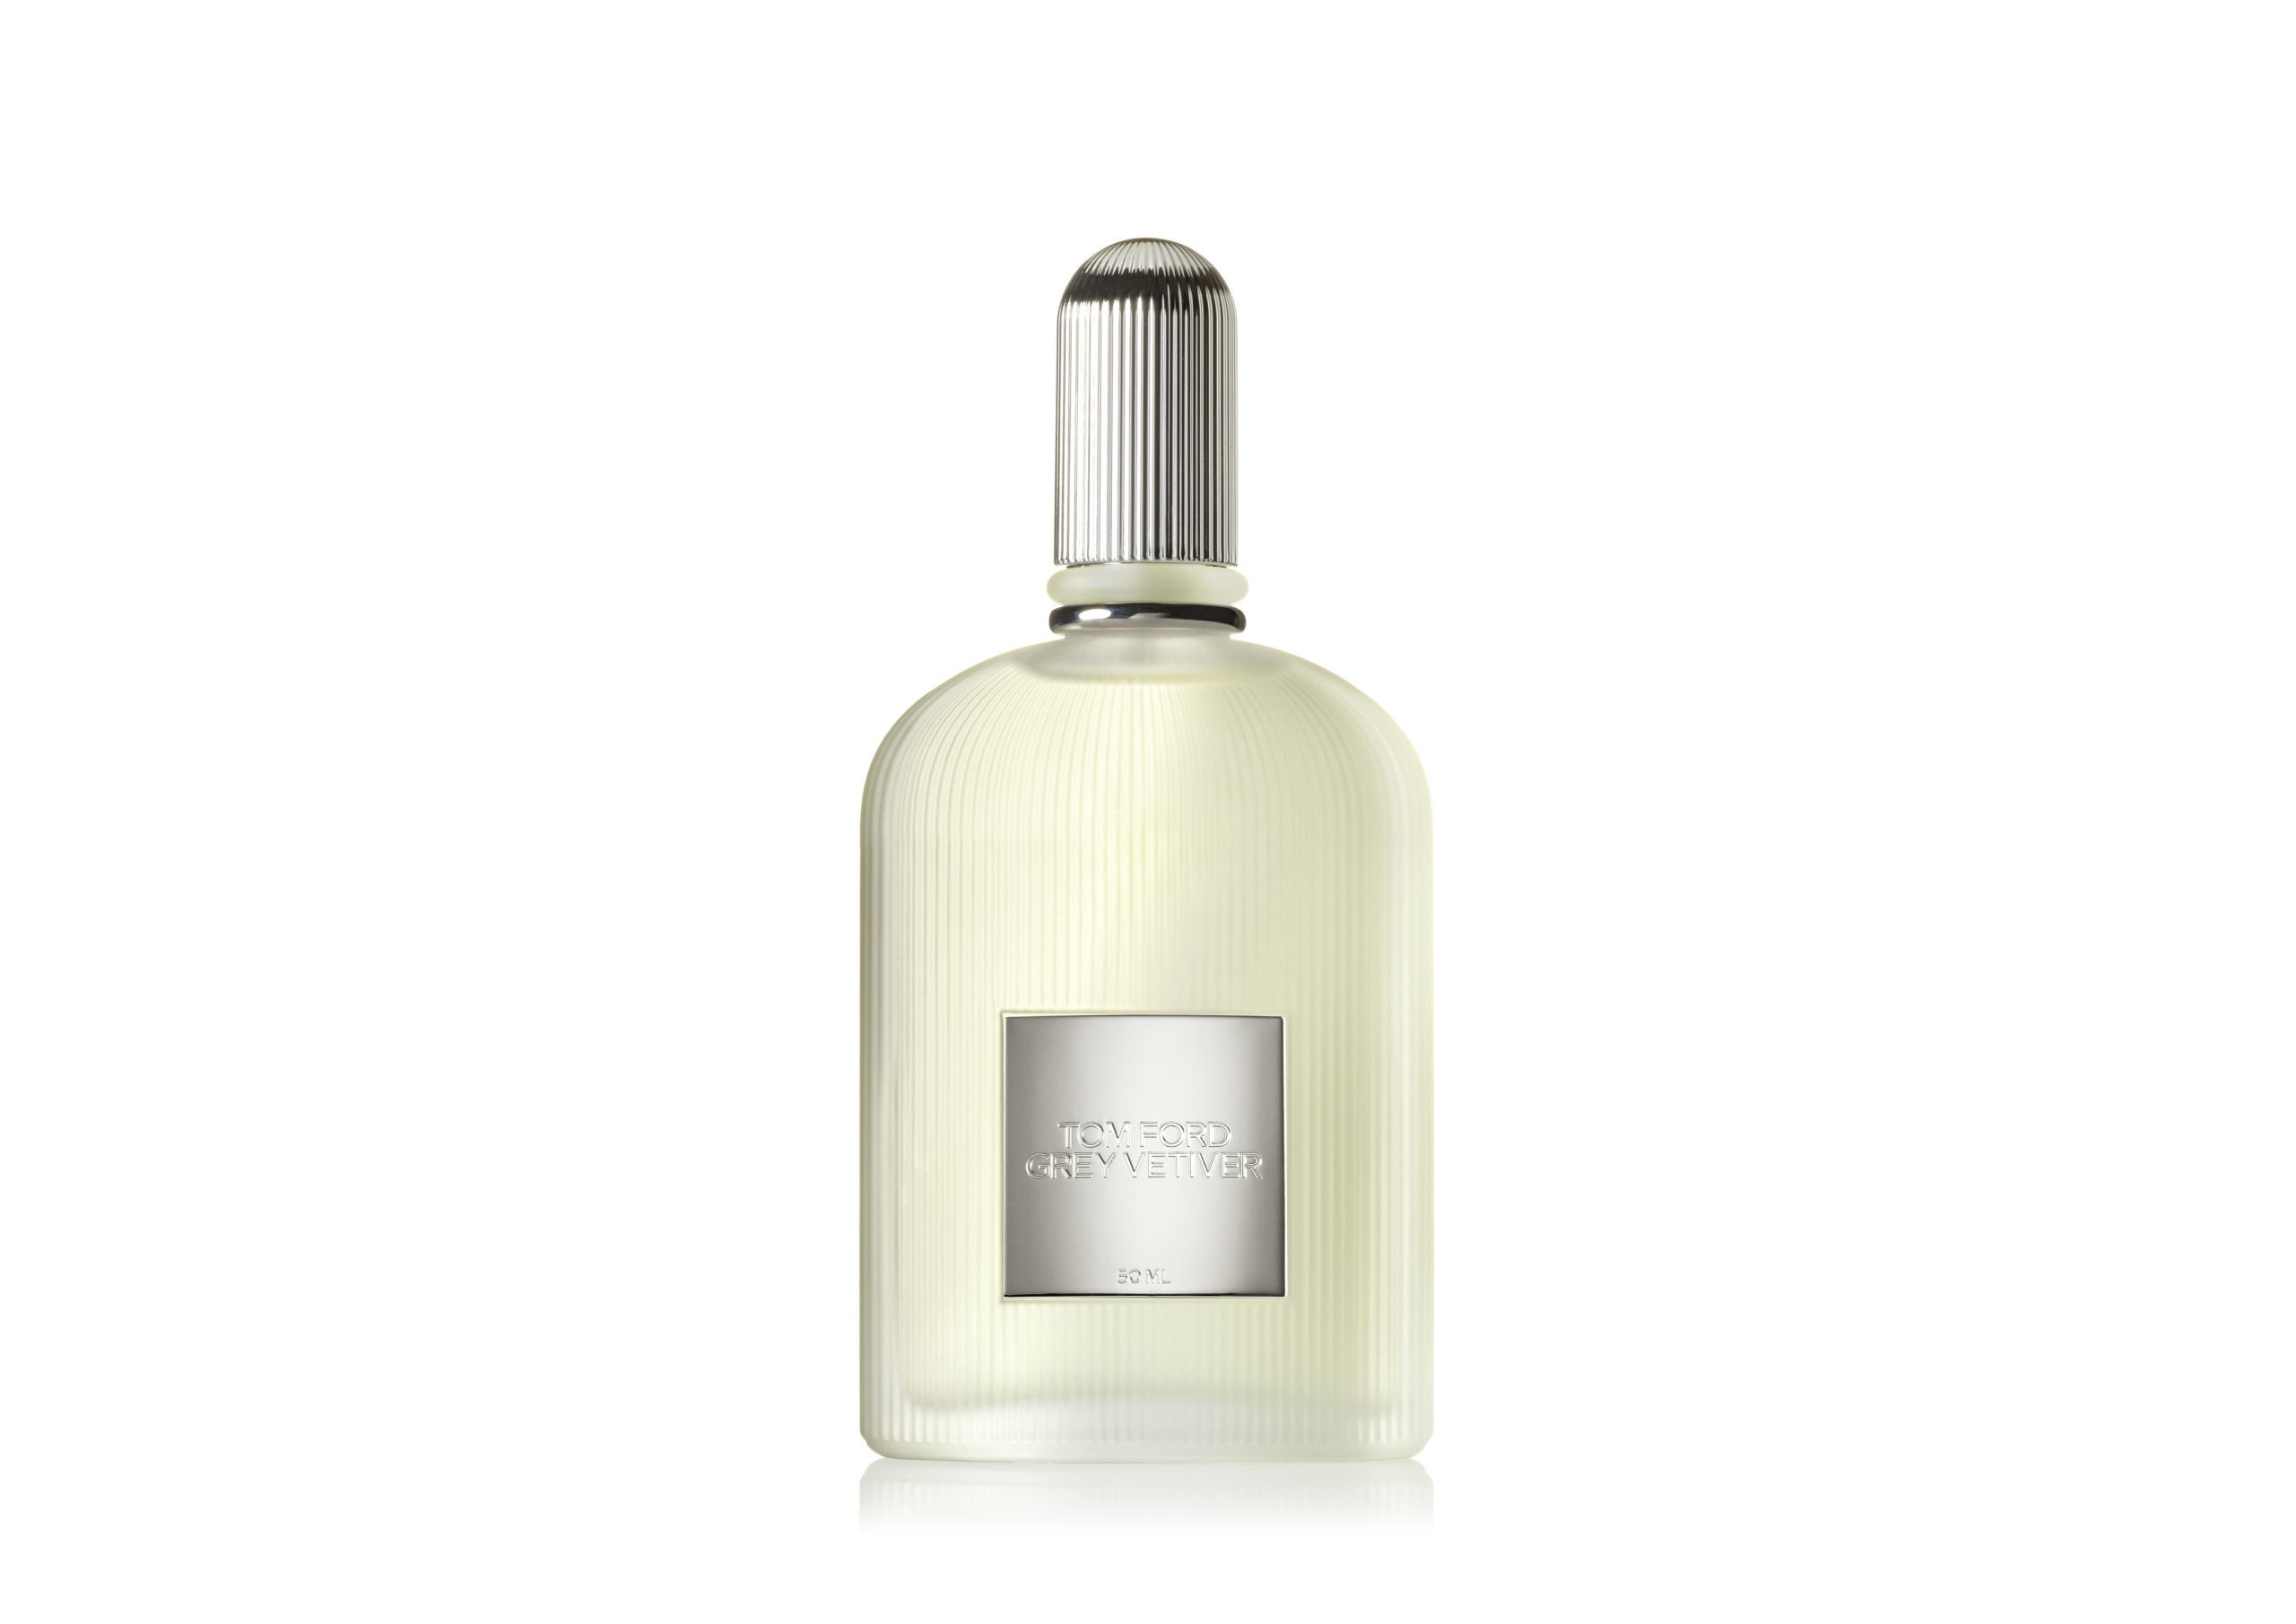 Image of Tom Ford Grey Vetiver - Parfum 50ml